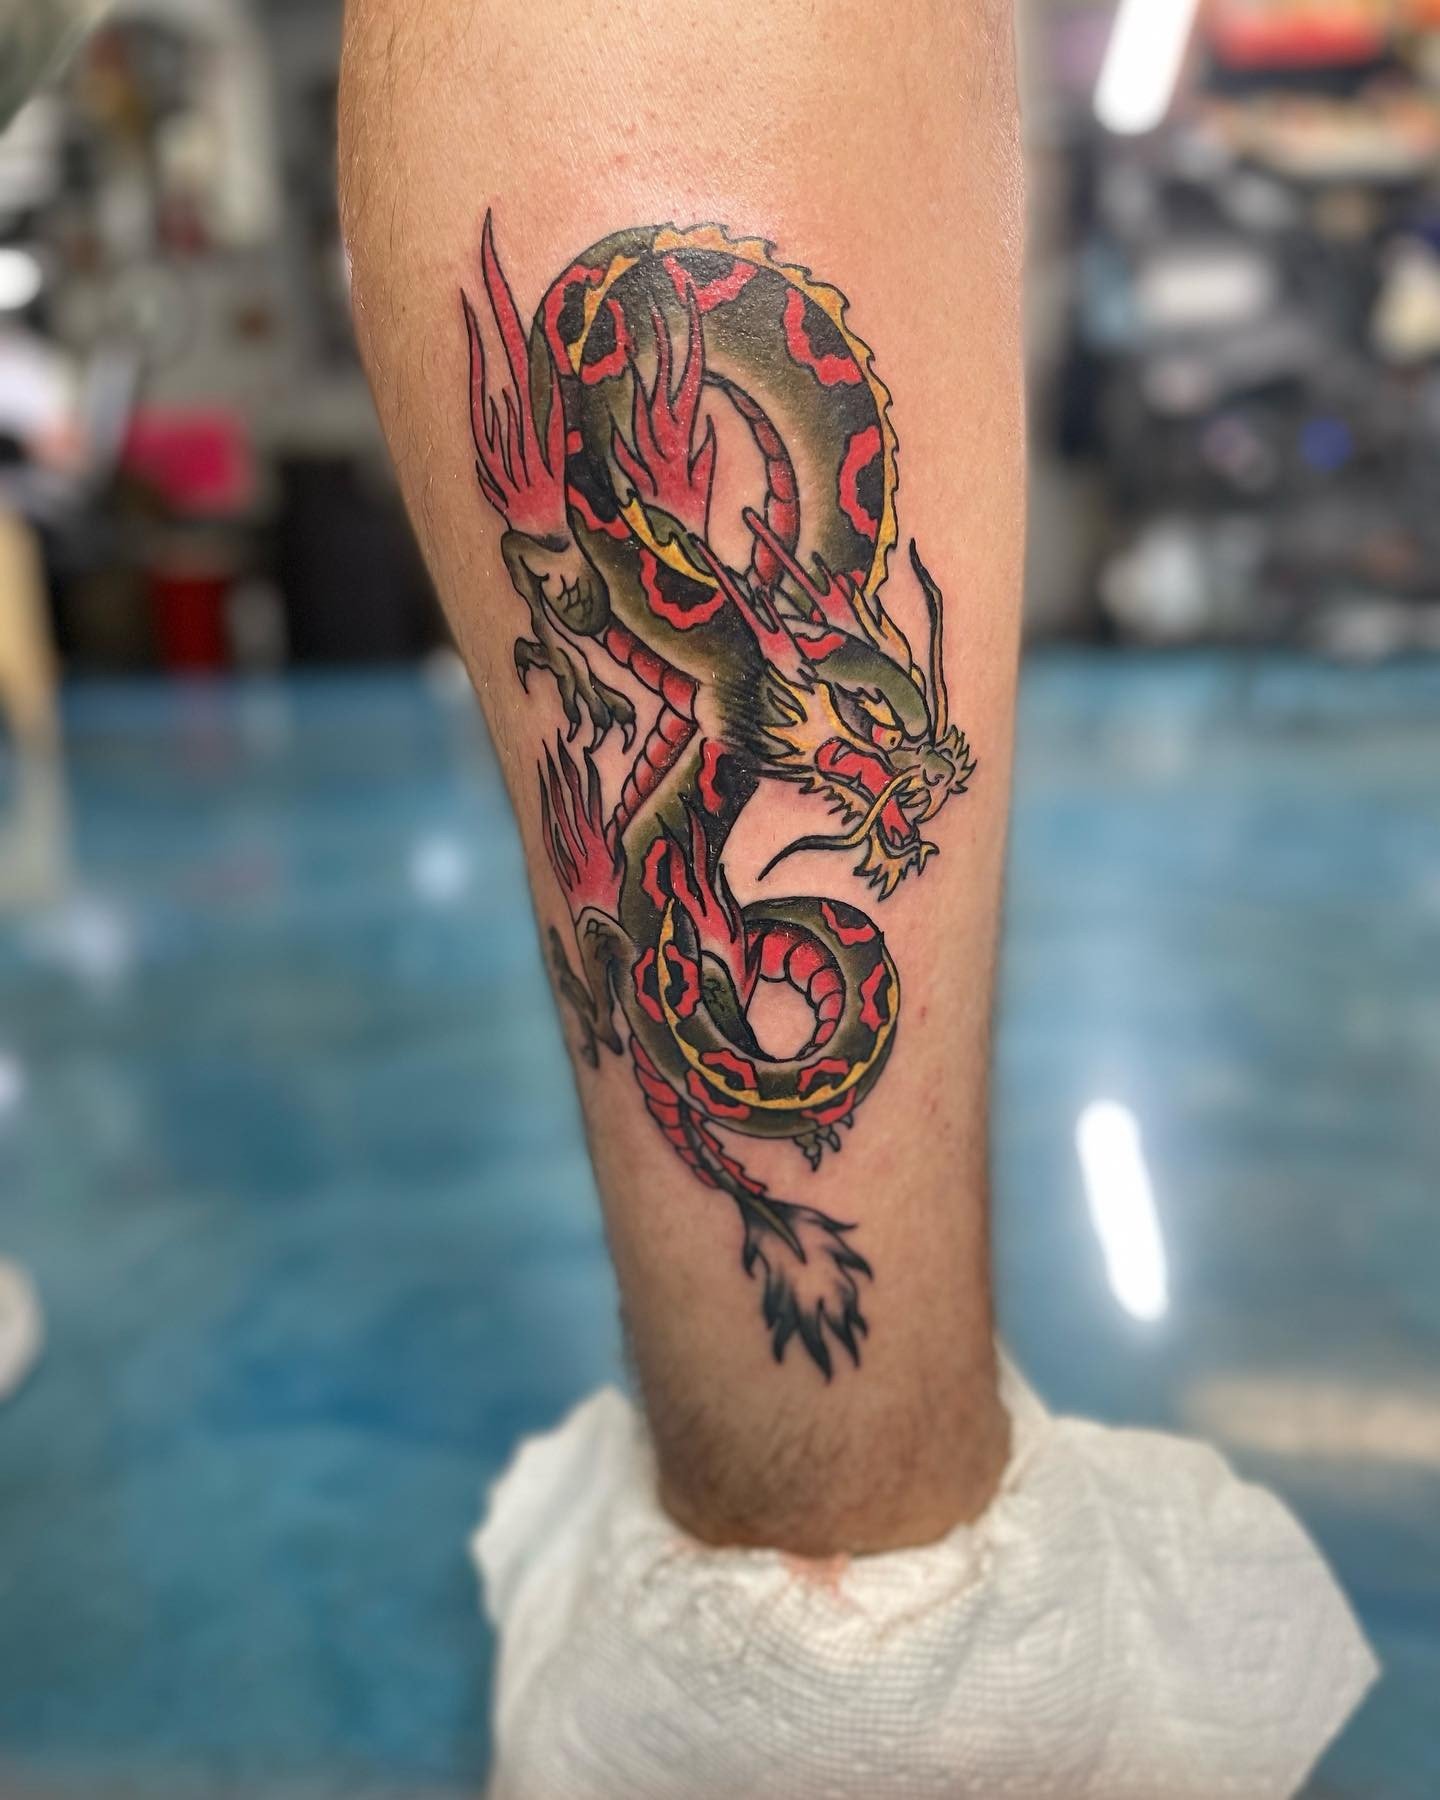 Tatuaje de dragón en la pantorrilla.